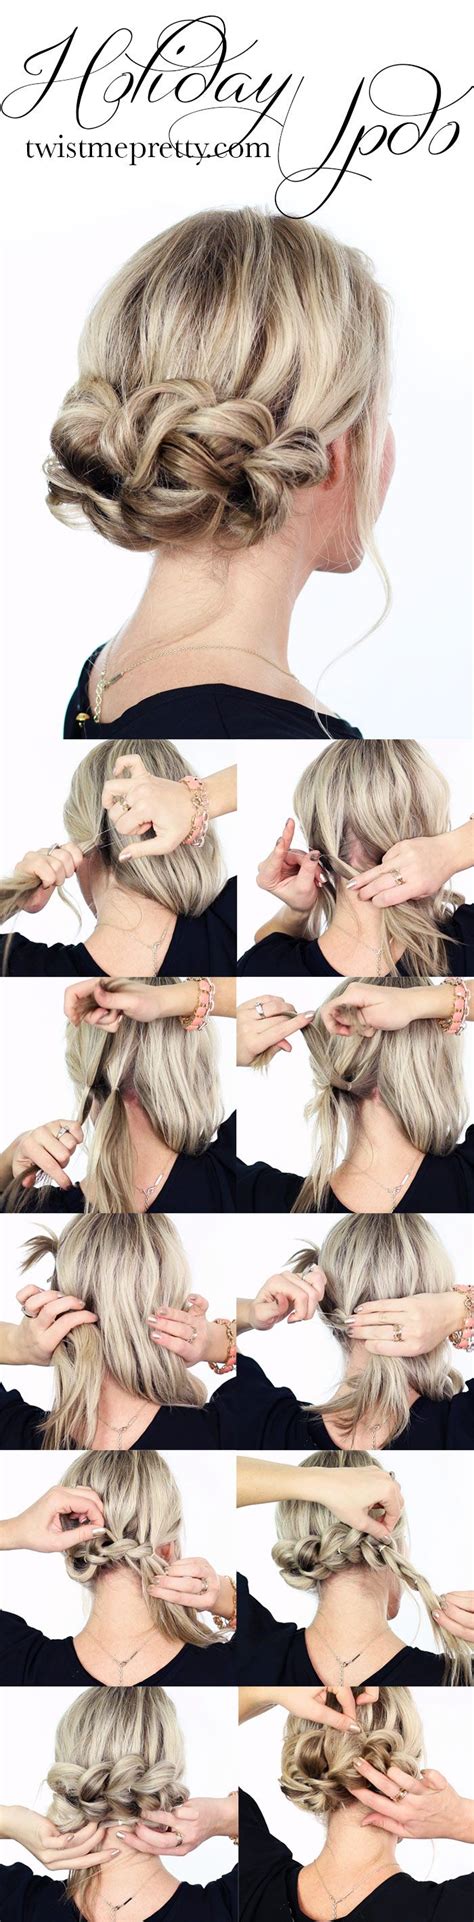 آموزش بافت مو hairstyles tutorials ️ top 12 amazing hairstyles compilation 2020. Hair Tutorials: Knot Updo Hairstyles - Pretty Designs